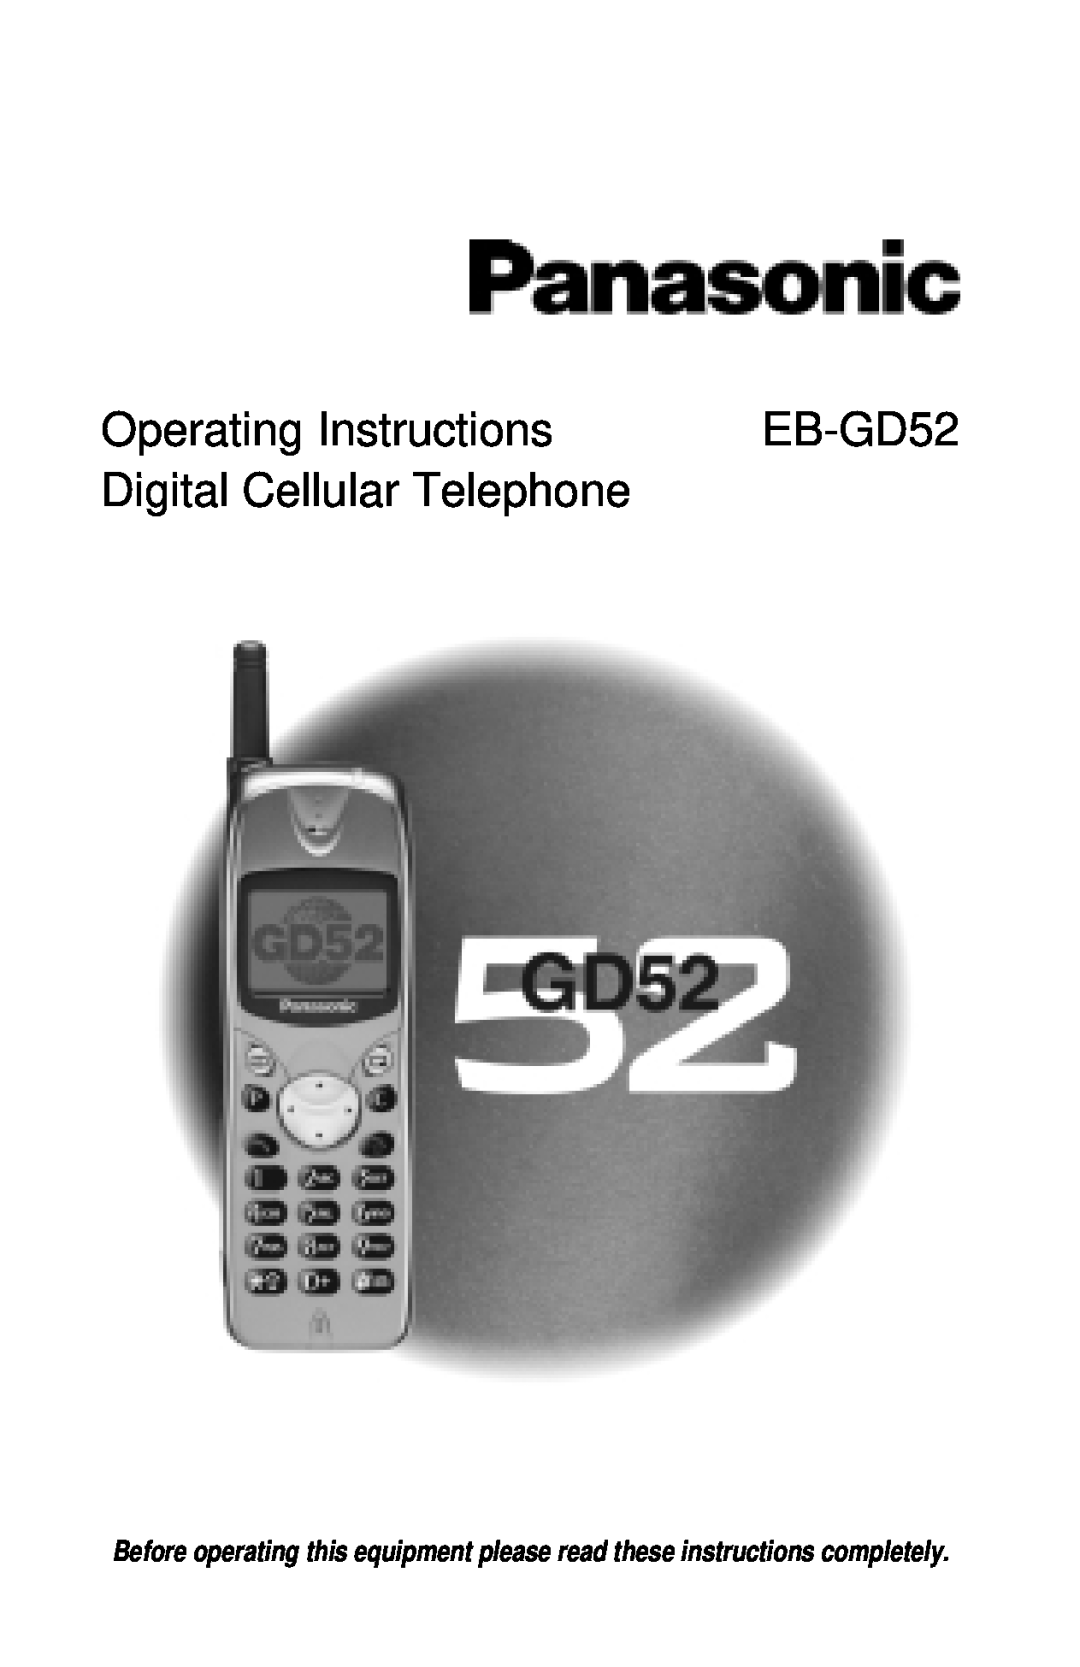 Panasonic EB-GD52 operating instructions Operating Instructions, Digital Cellular Telephone 